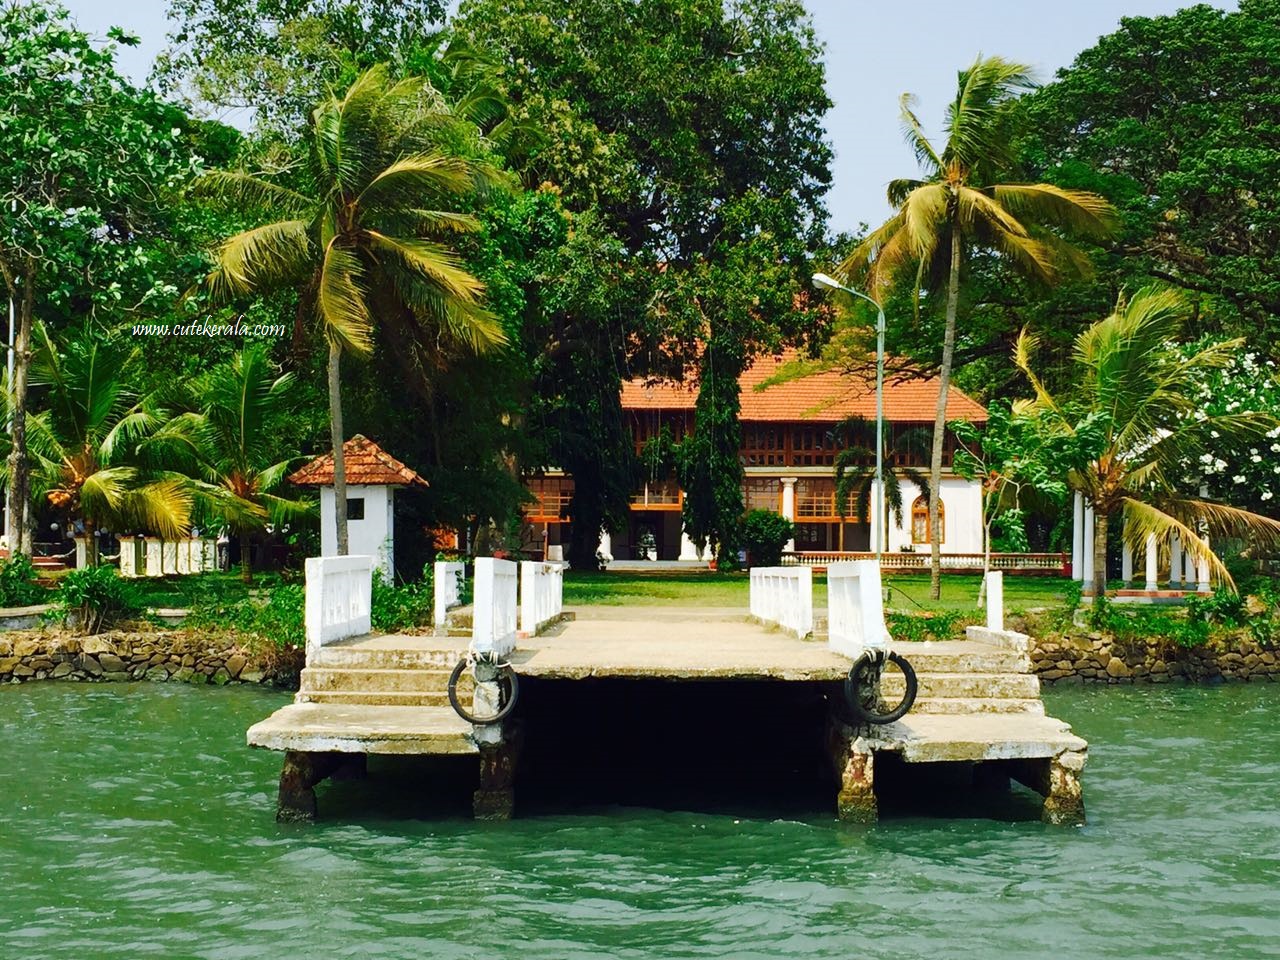 Kochi boat bay